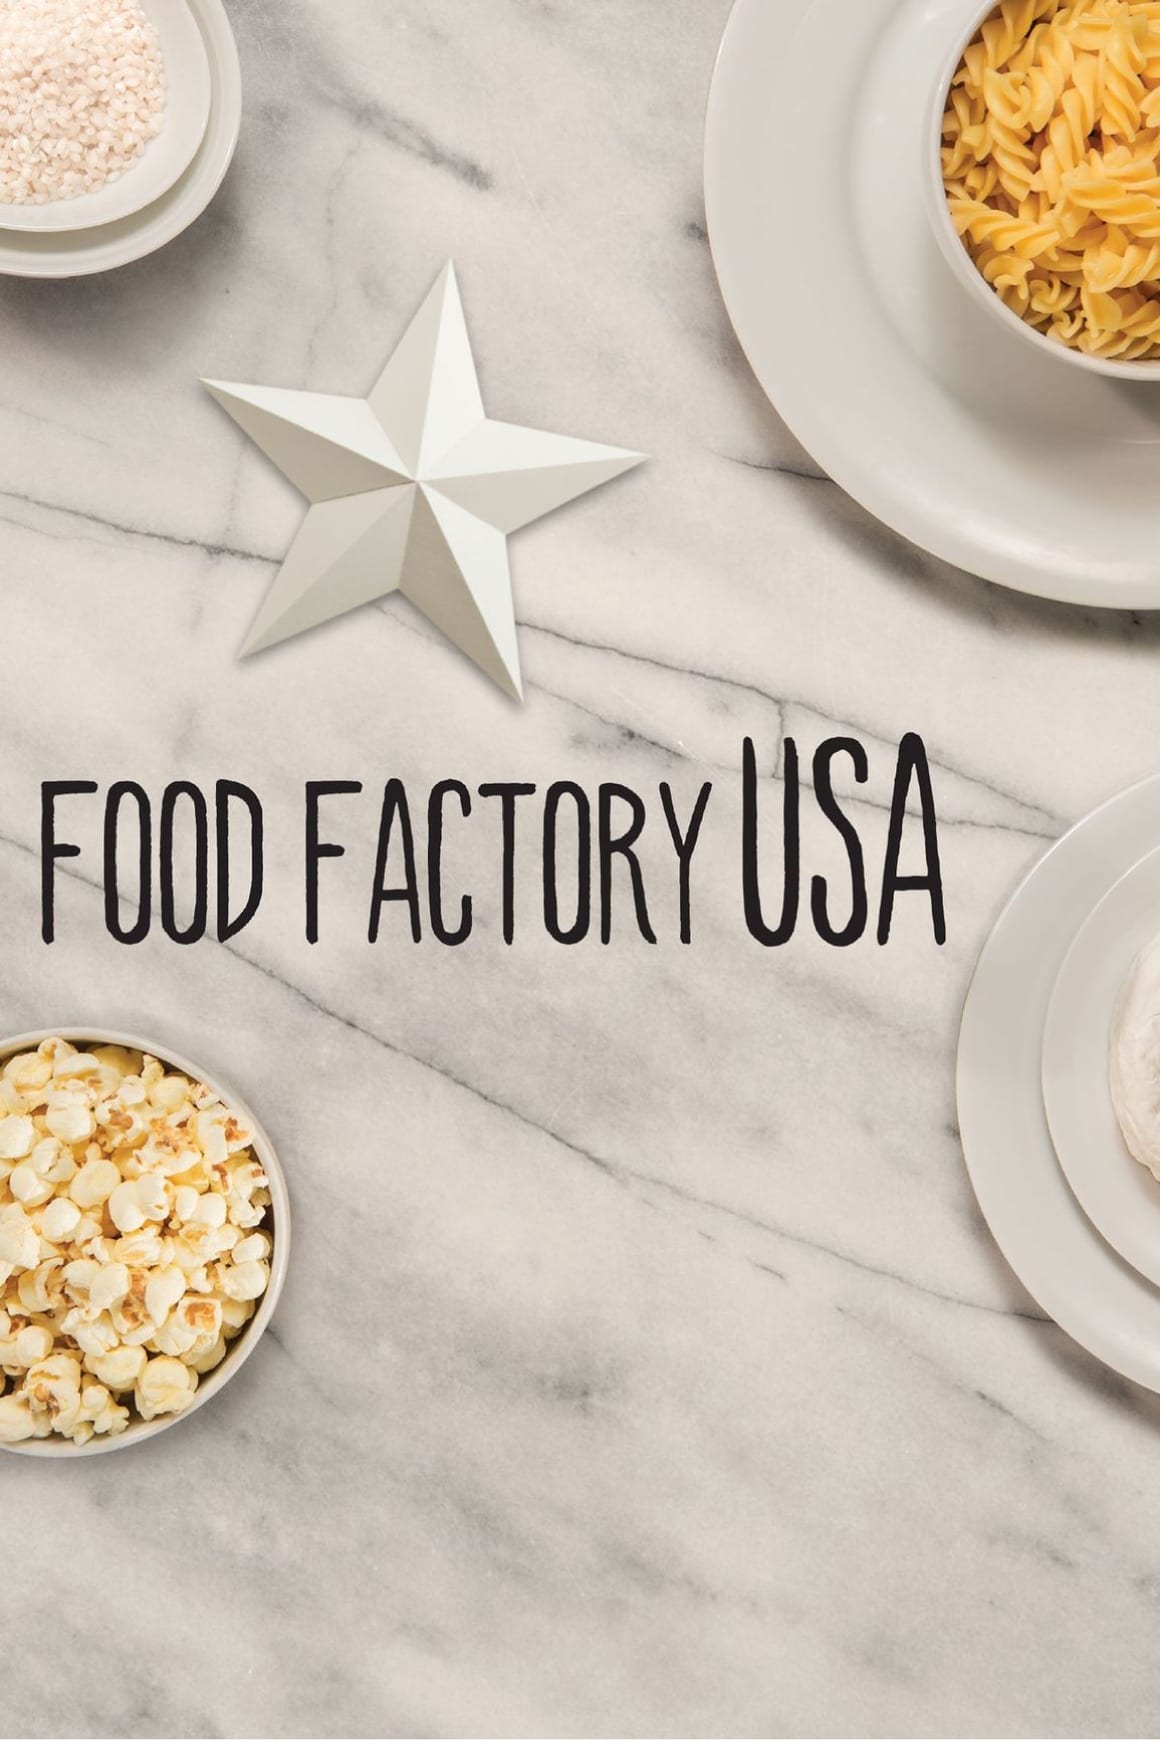 Caratula de Food Factory USA (Food Factory USA) 